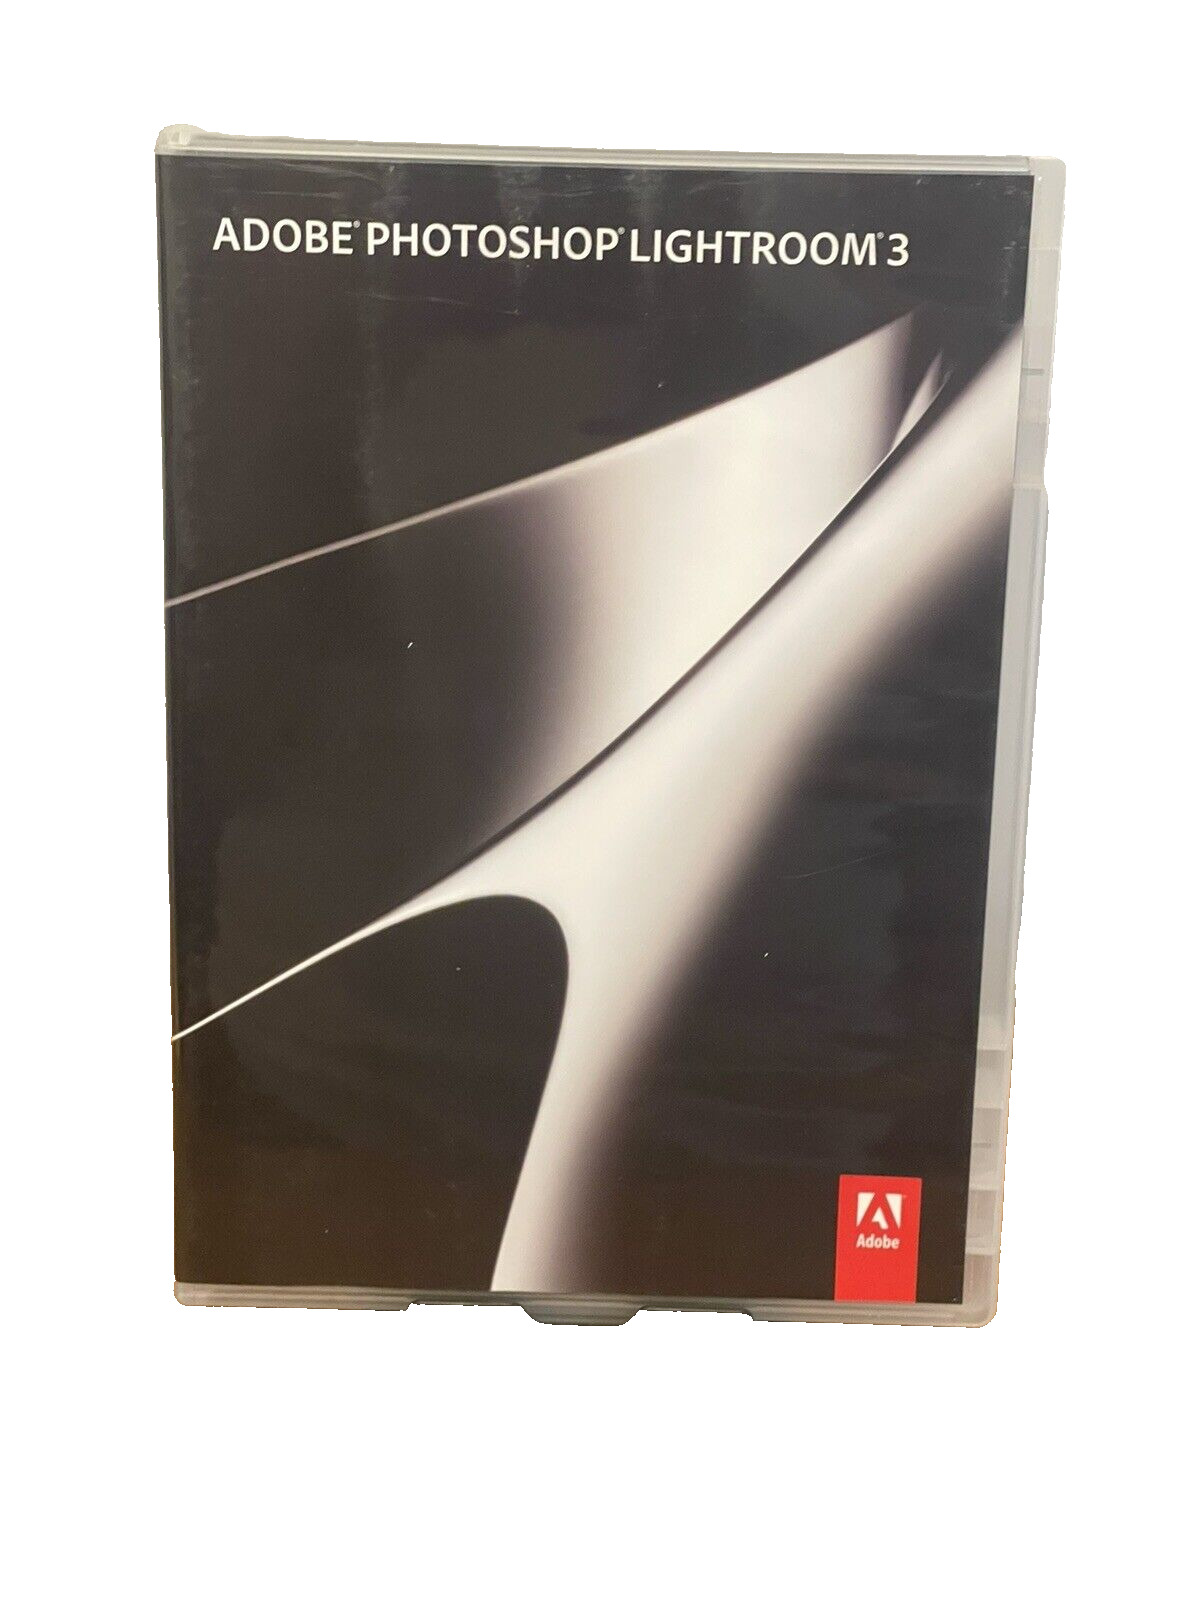 Adobe Photoshop Lightroom 3 Full Retail Version WIN/MAC